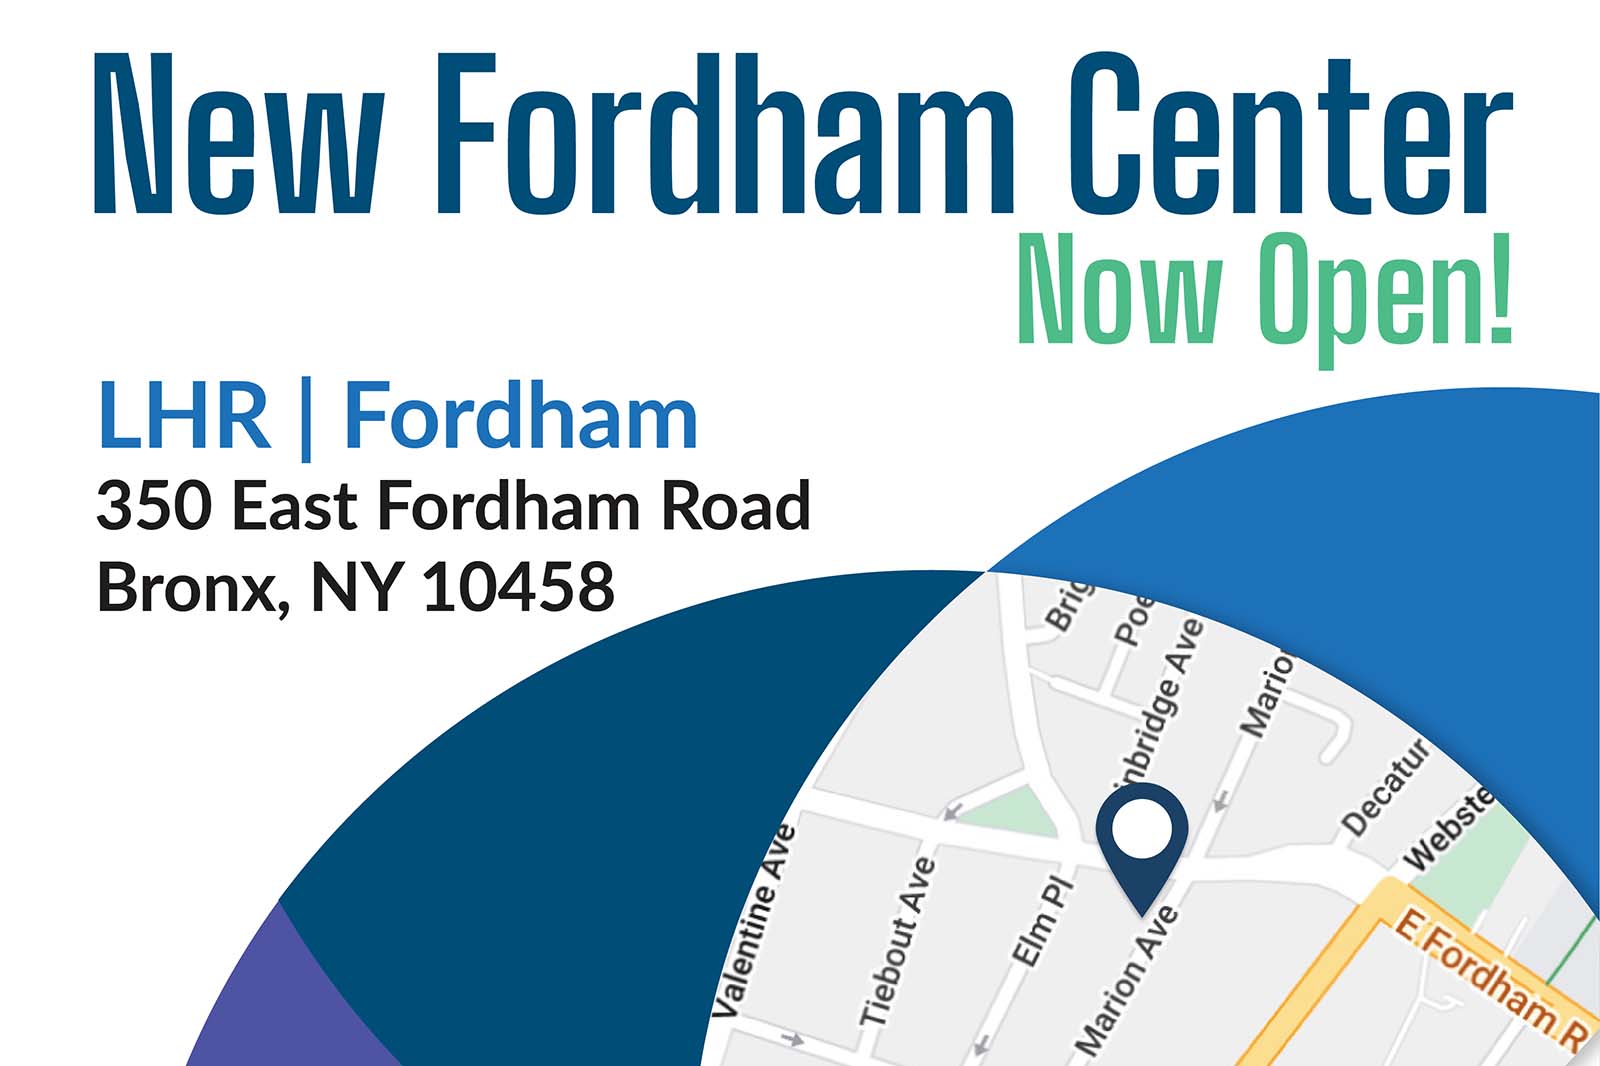 LHR | Fordham Now Open!